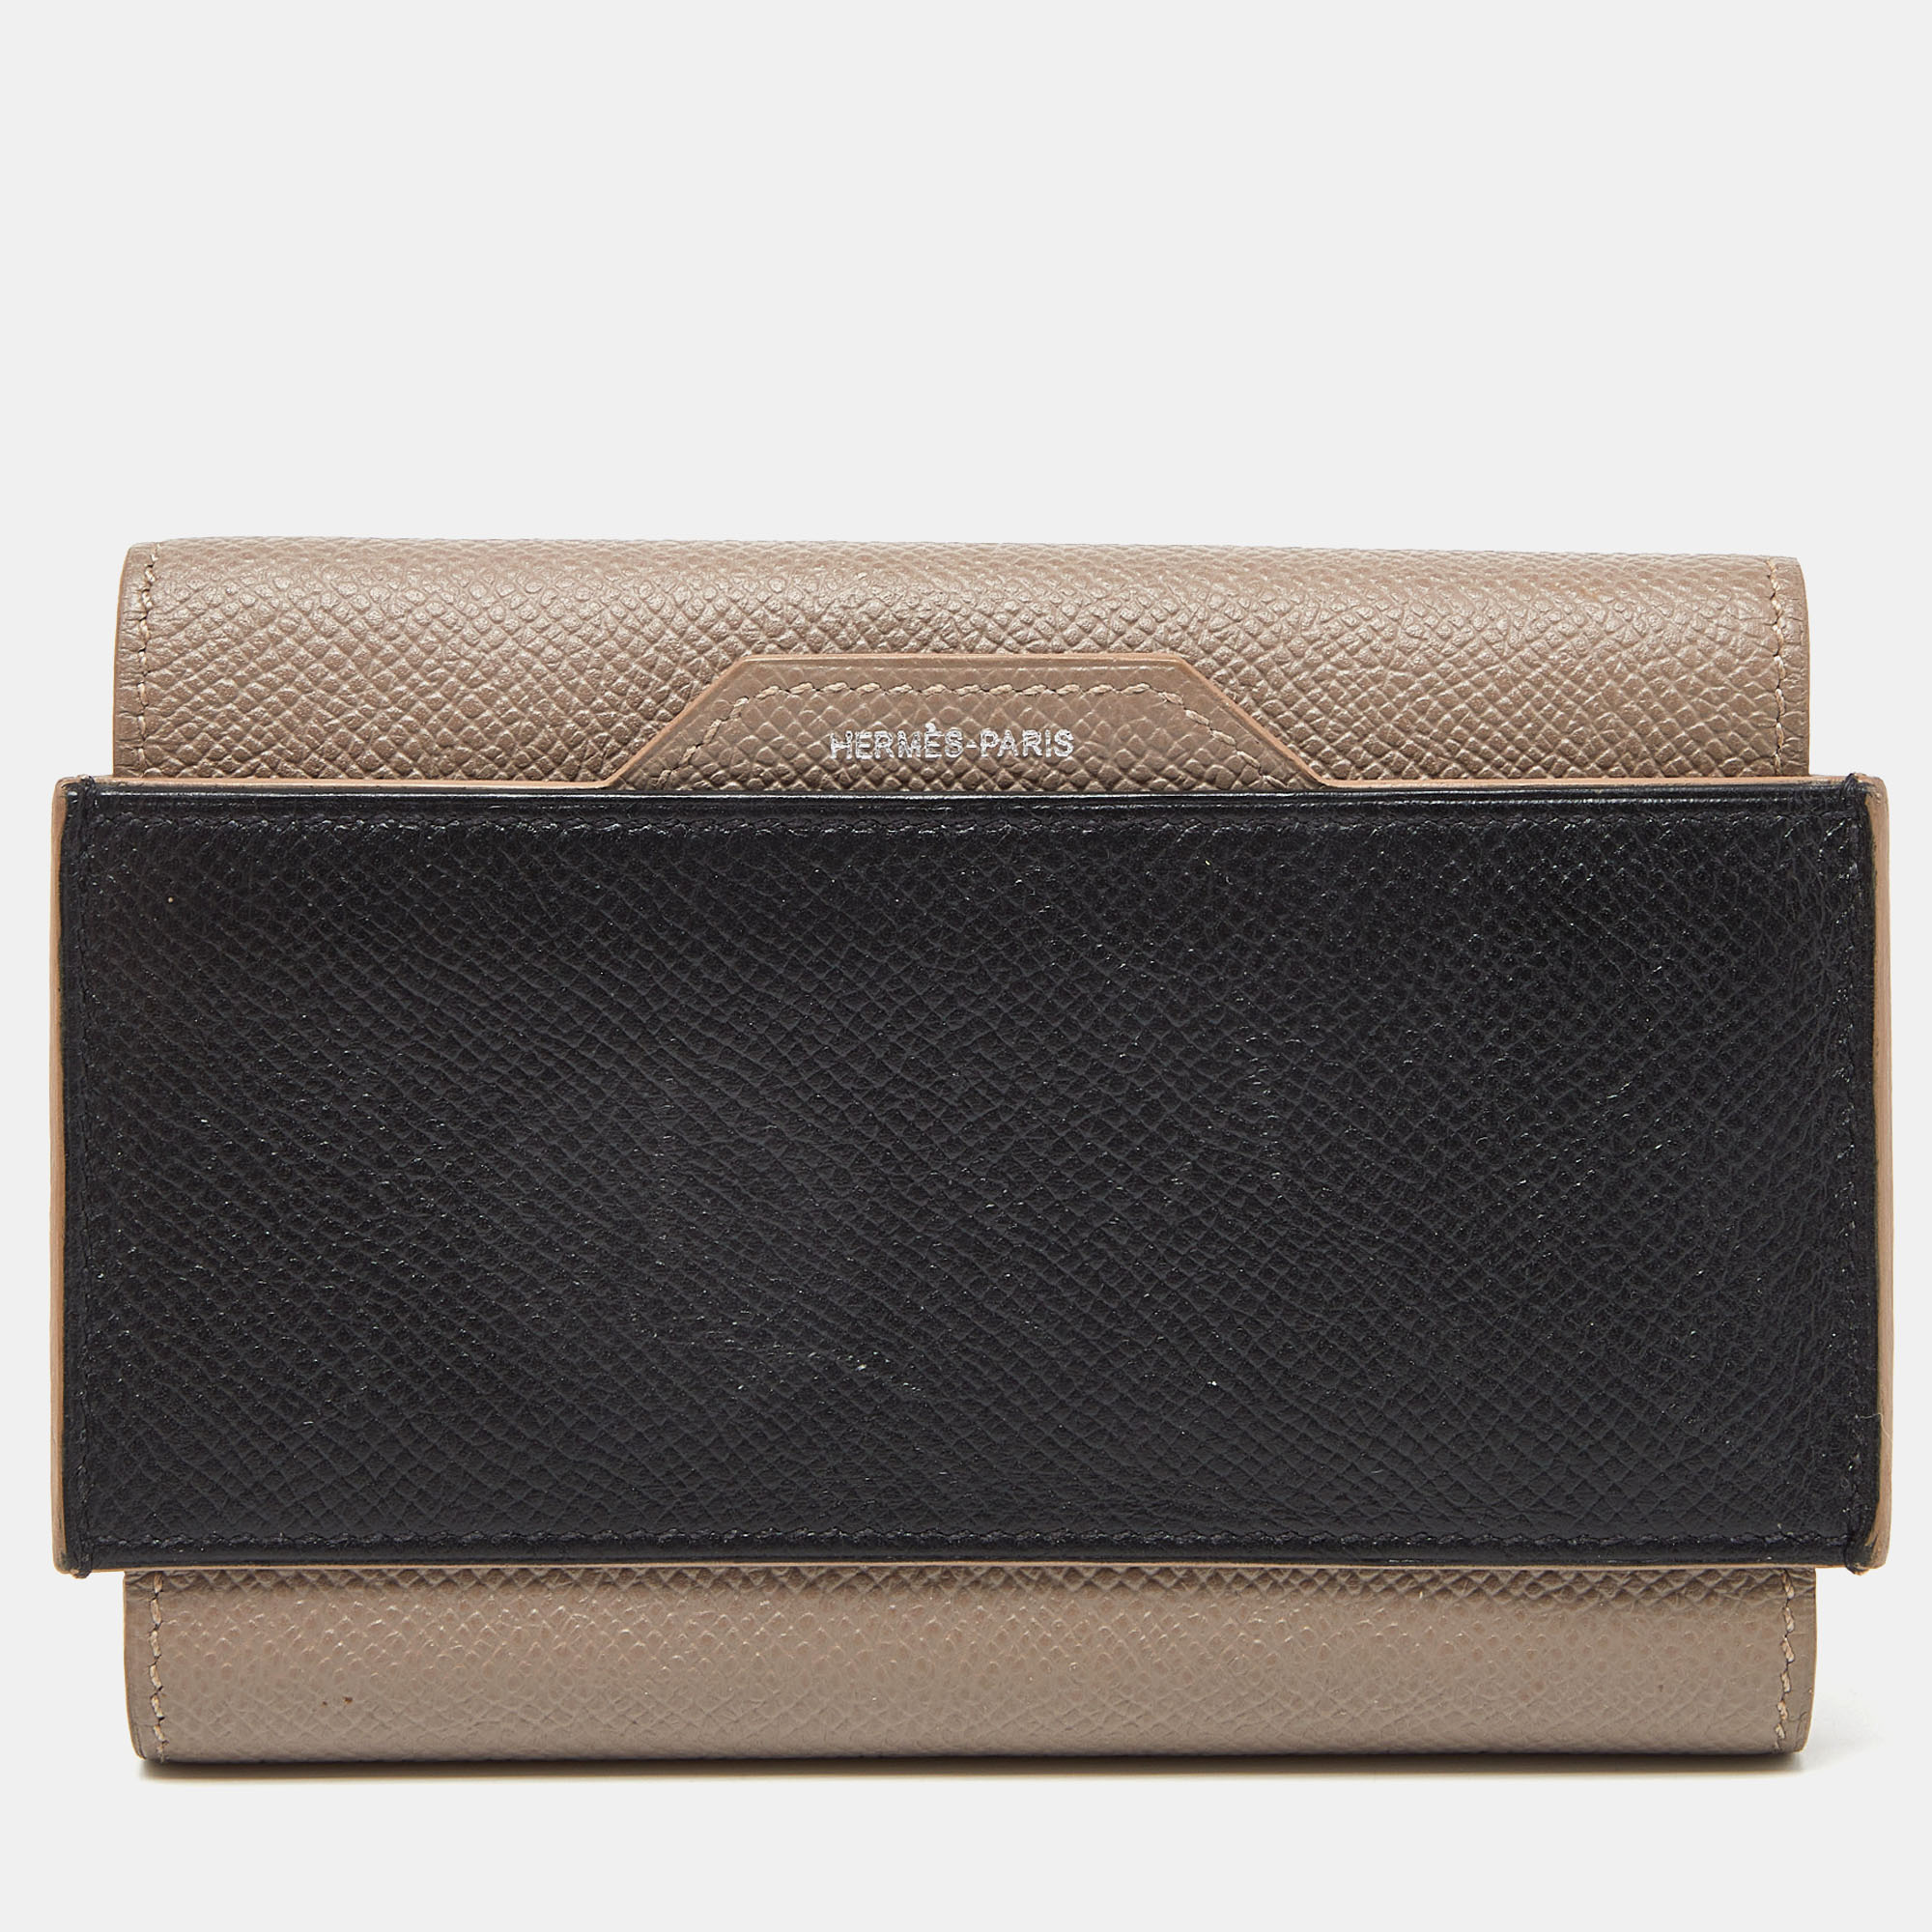 Hermes herm&egrave;s etain/black epsom leather passant compact wallet